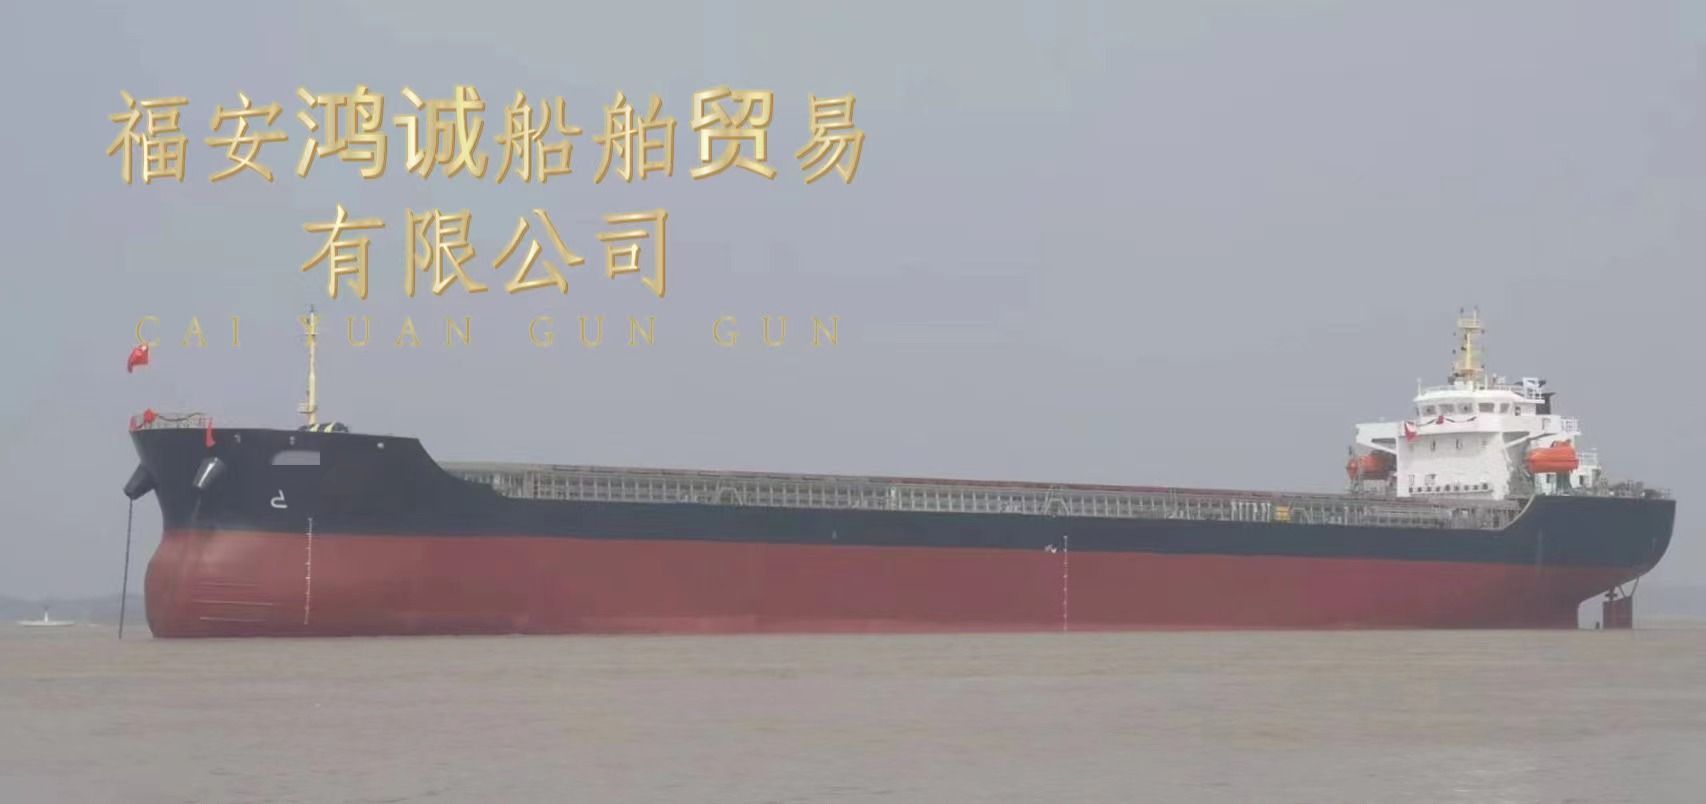 17200DWT散货船
21年中国造ZC船级